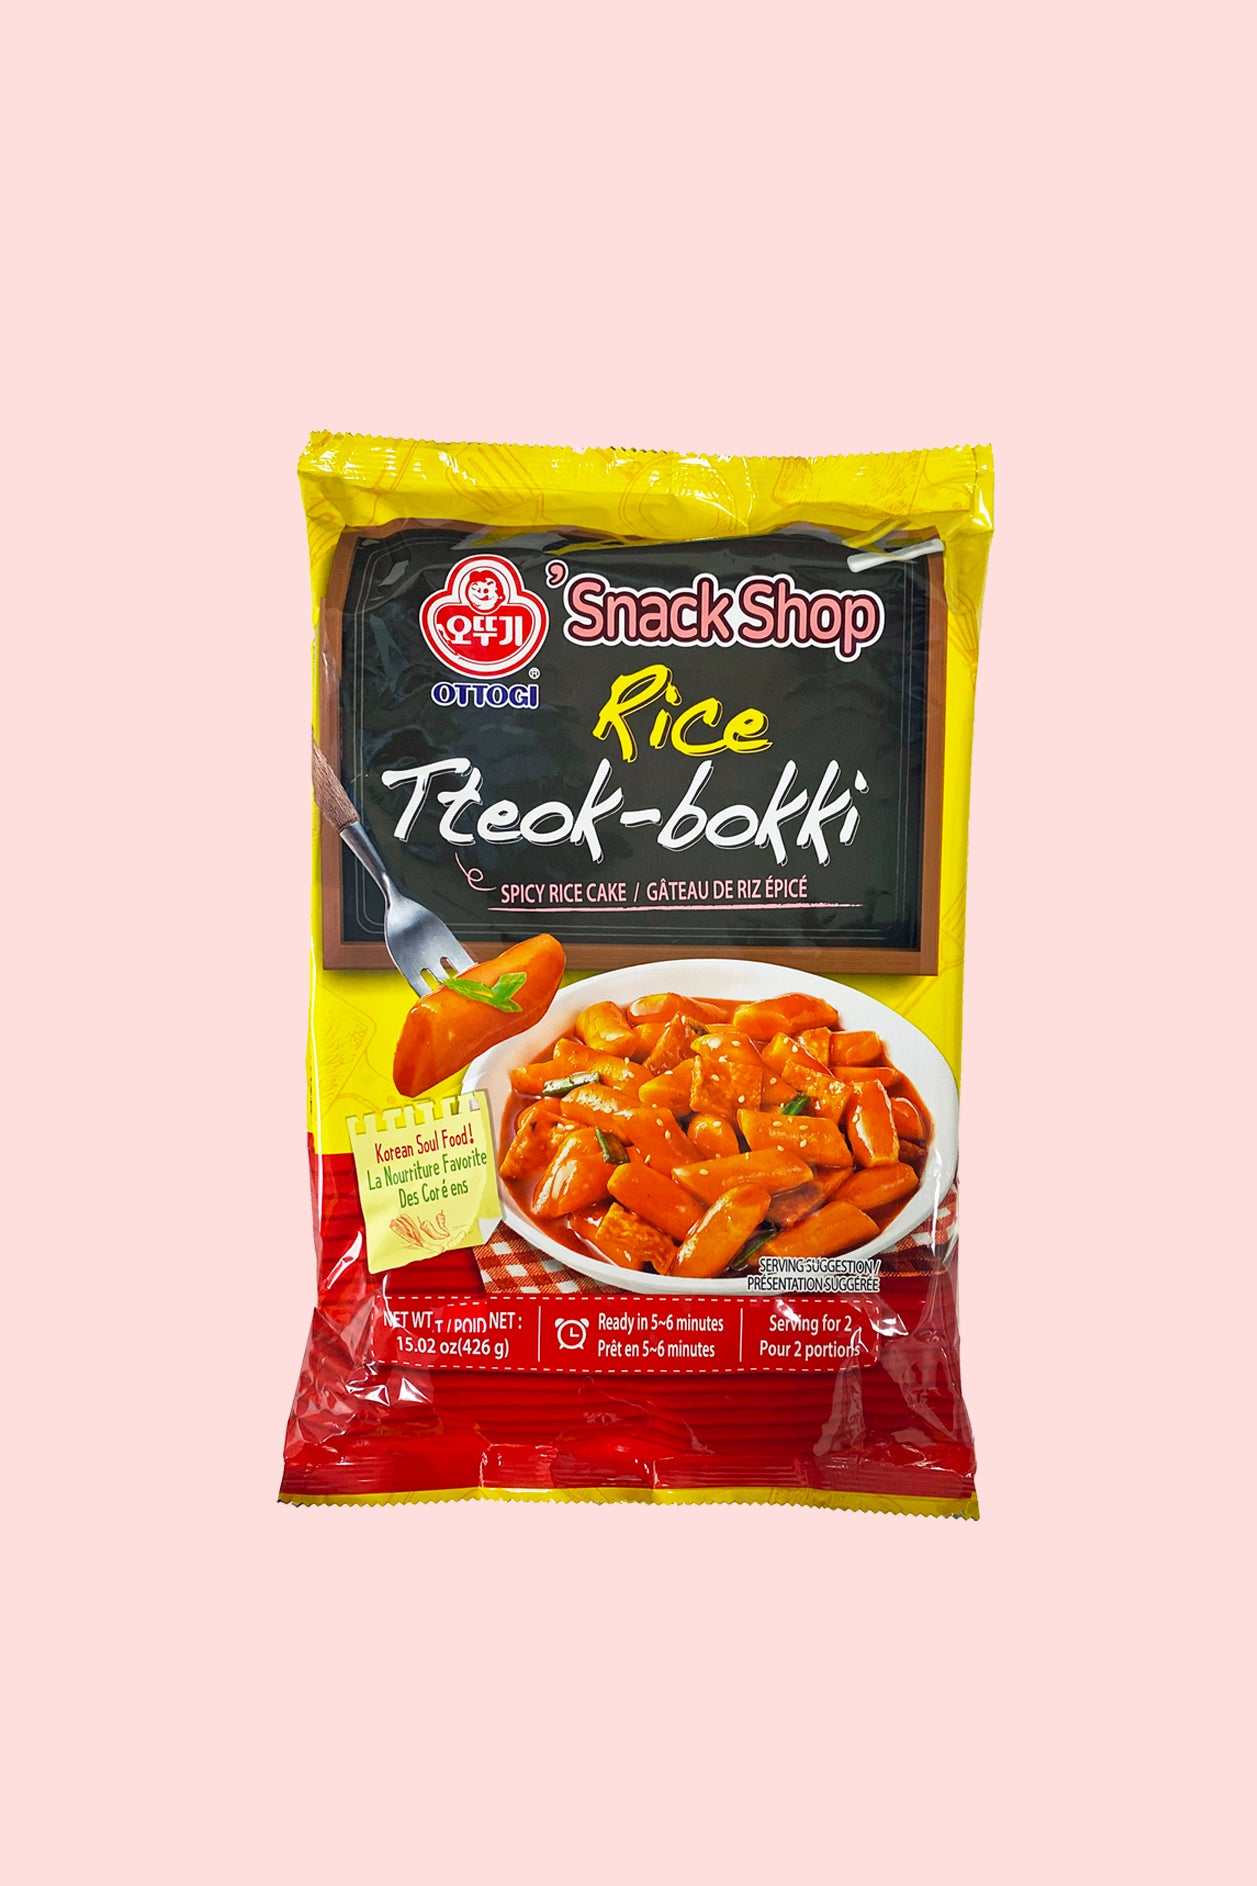 Tteok-bokki (Spicy Rice Cake)